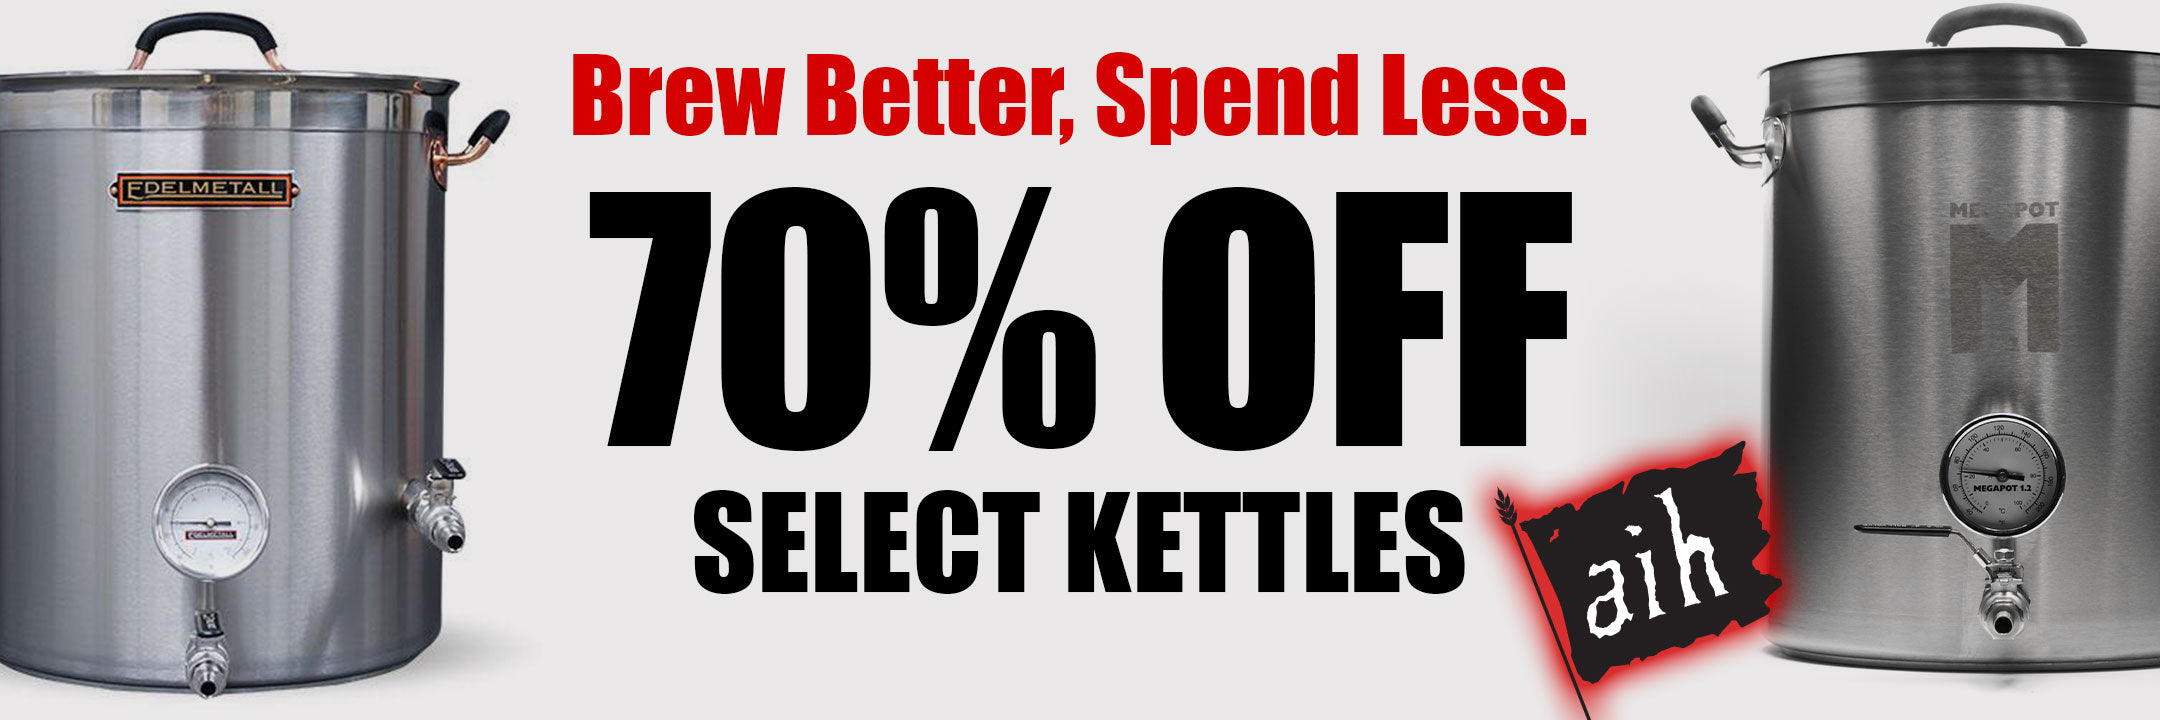 homebrew kettle sale